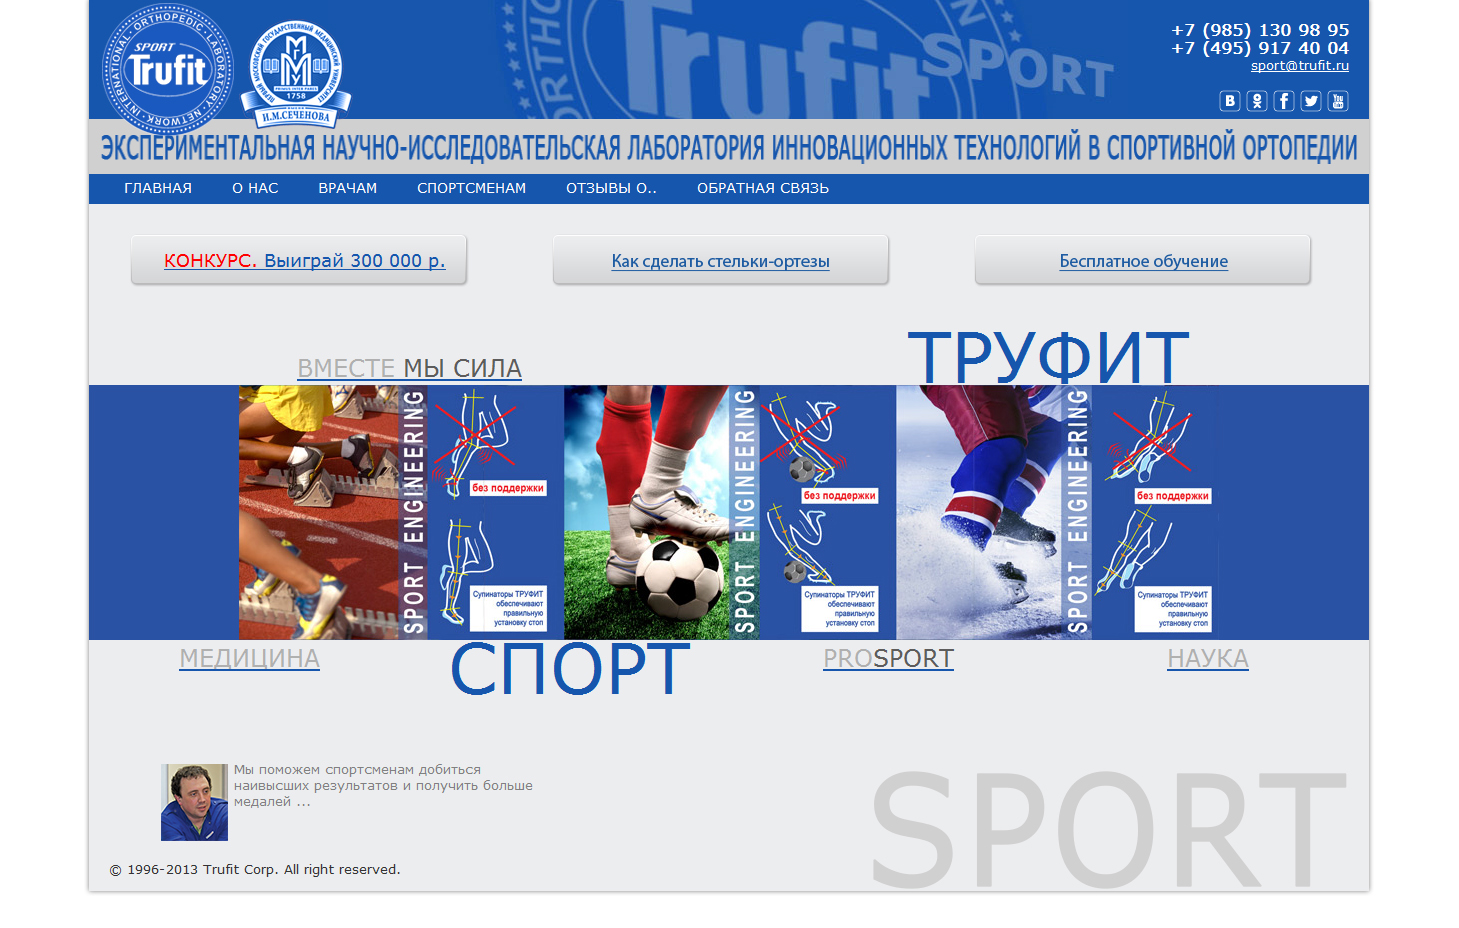 Труфит - Спорт промо страница